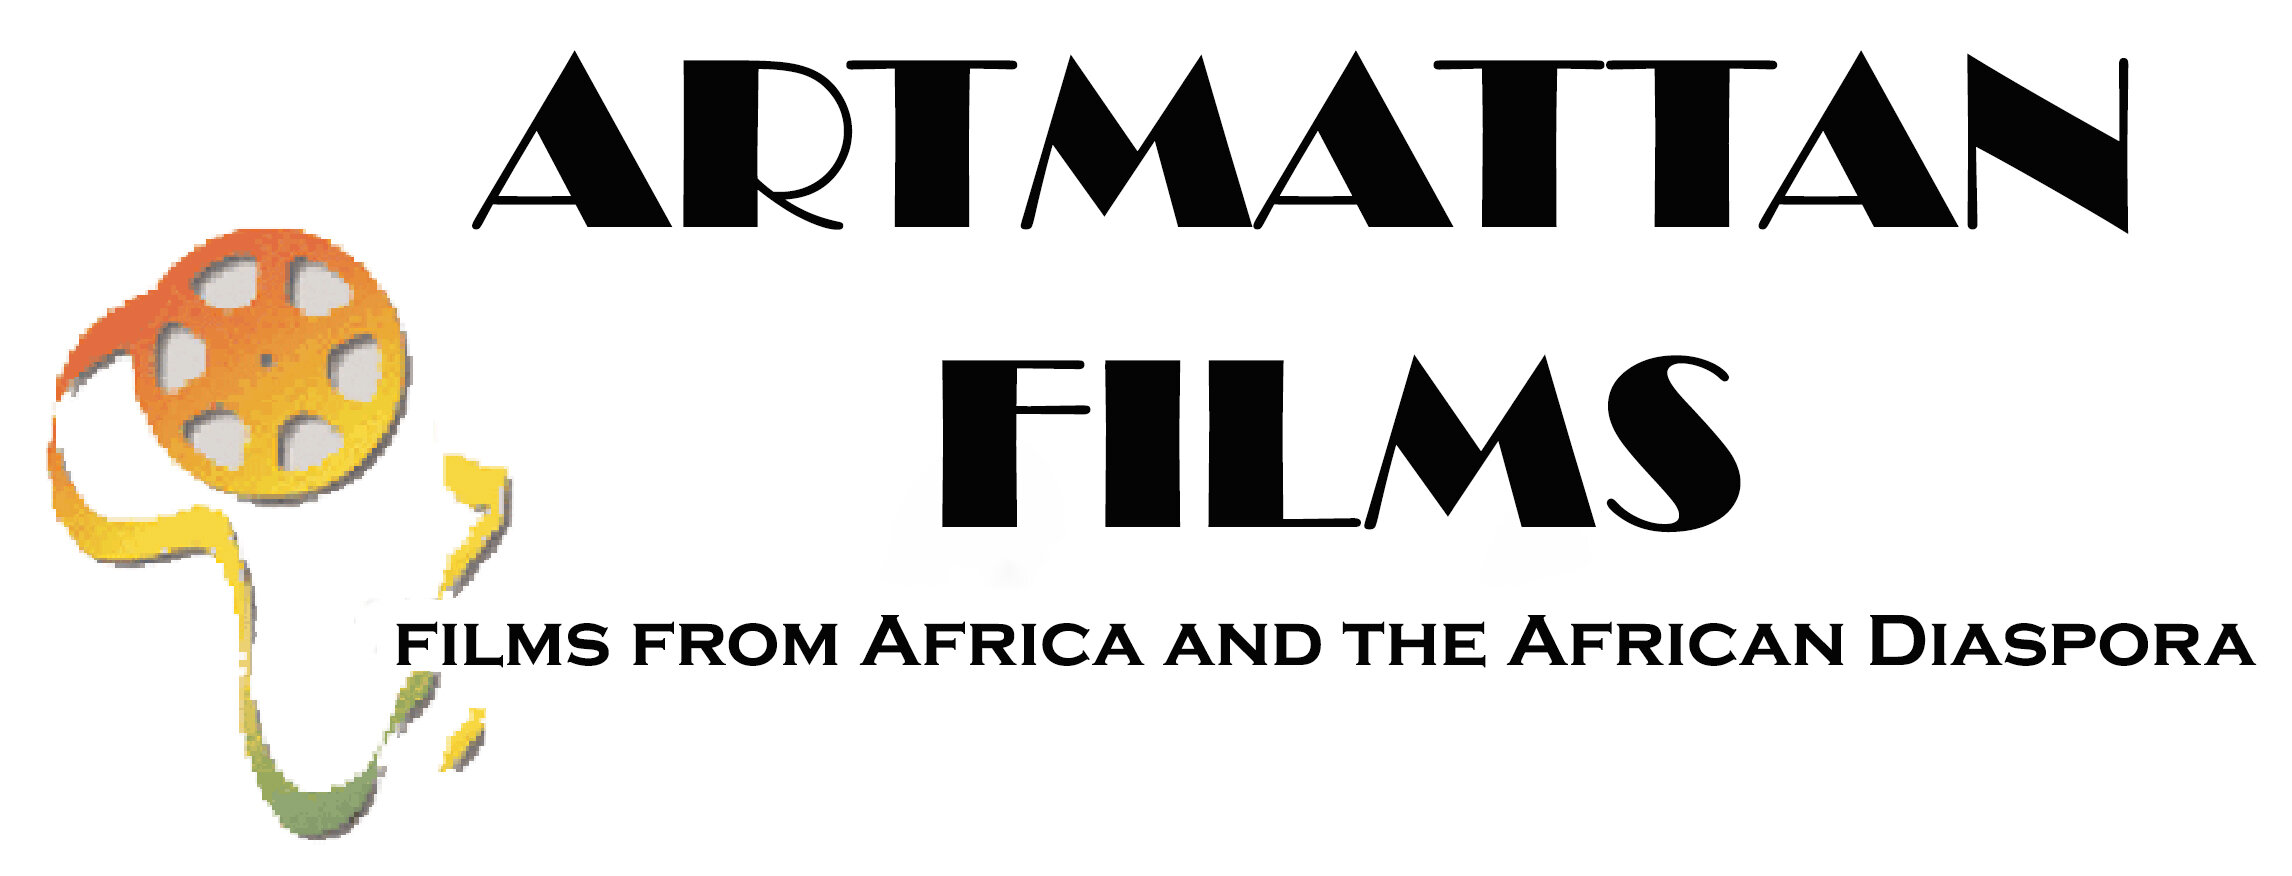 ArtMattan Films